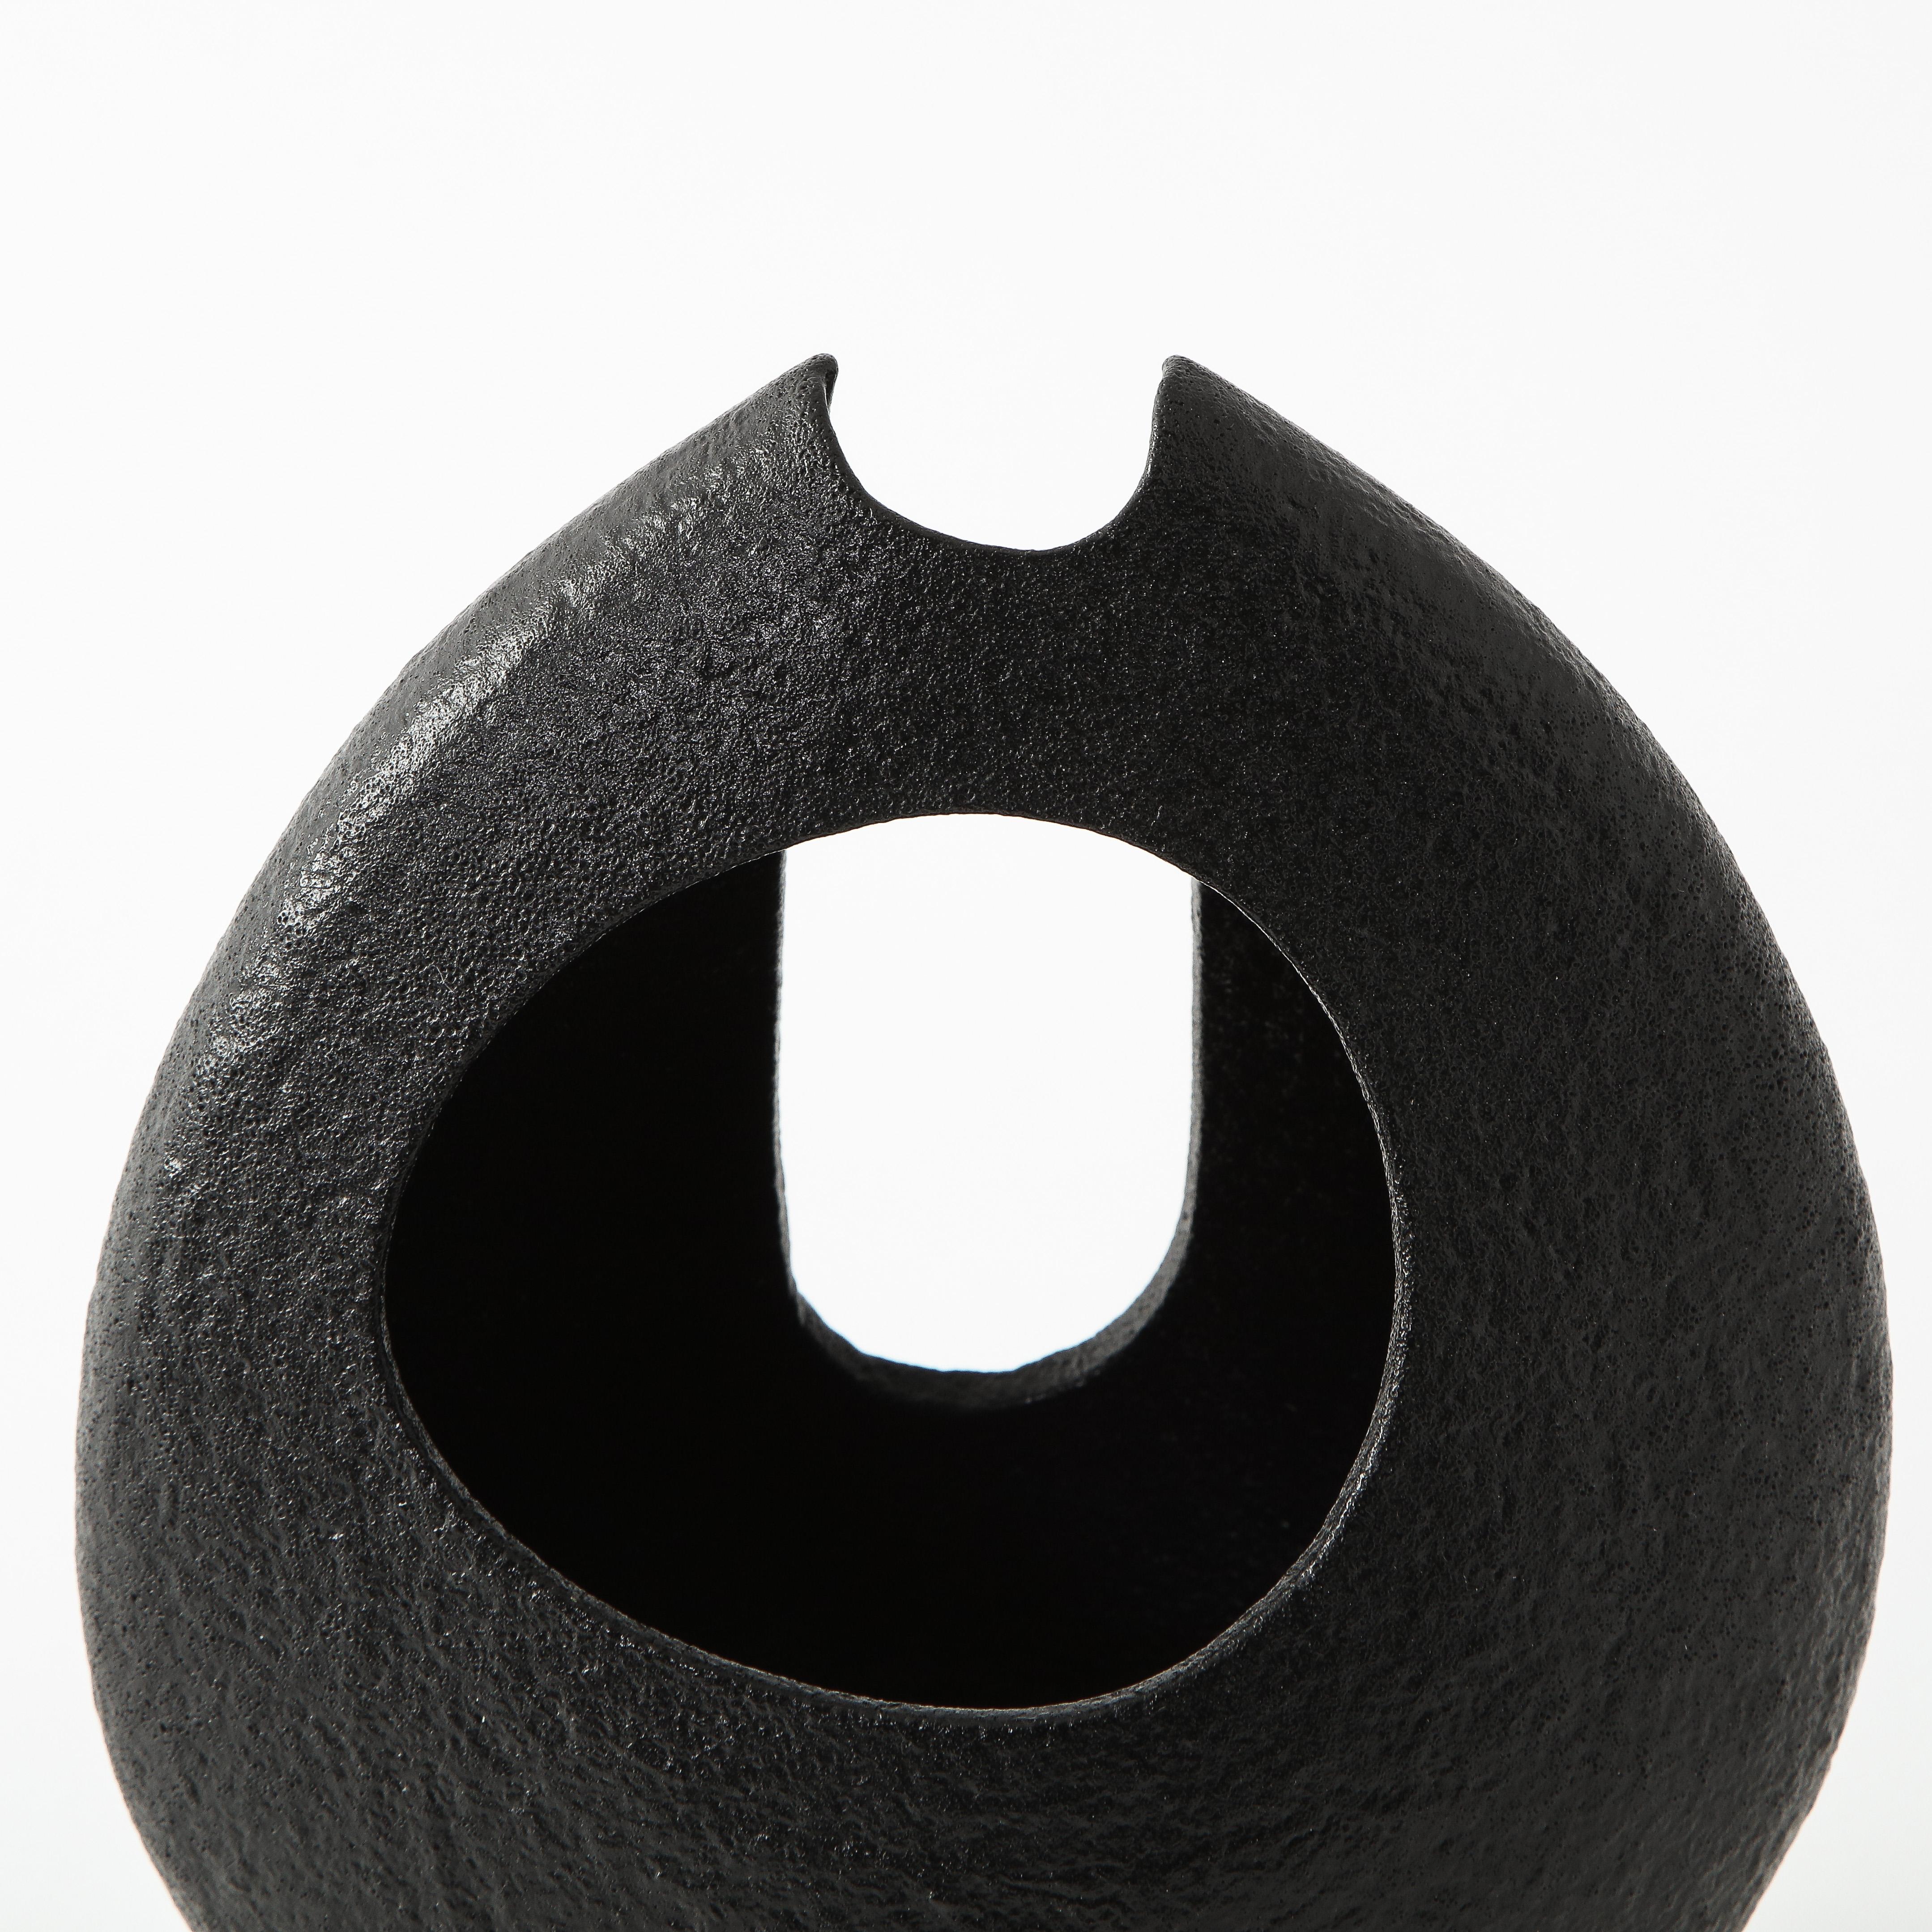 Asymmetrical Almond-Shaped Black Textured Japanese Ceramic Vessel 6